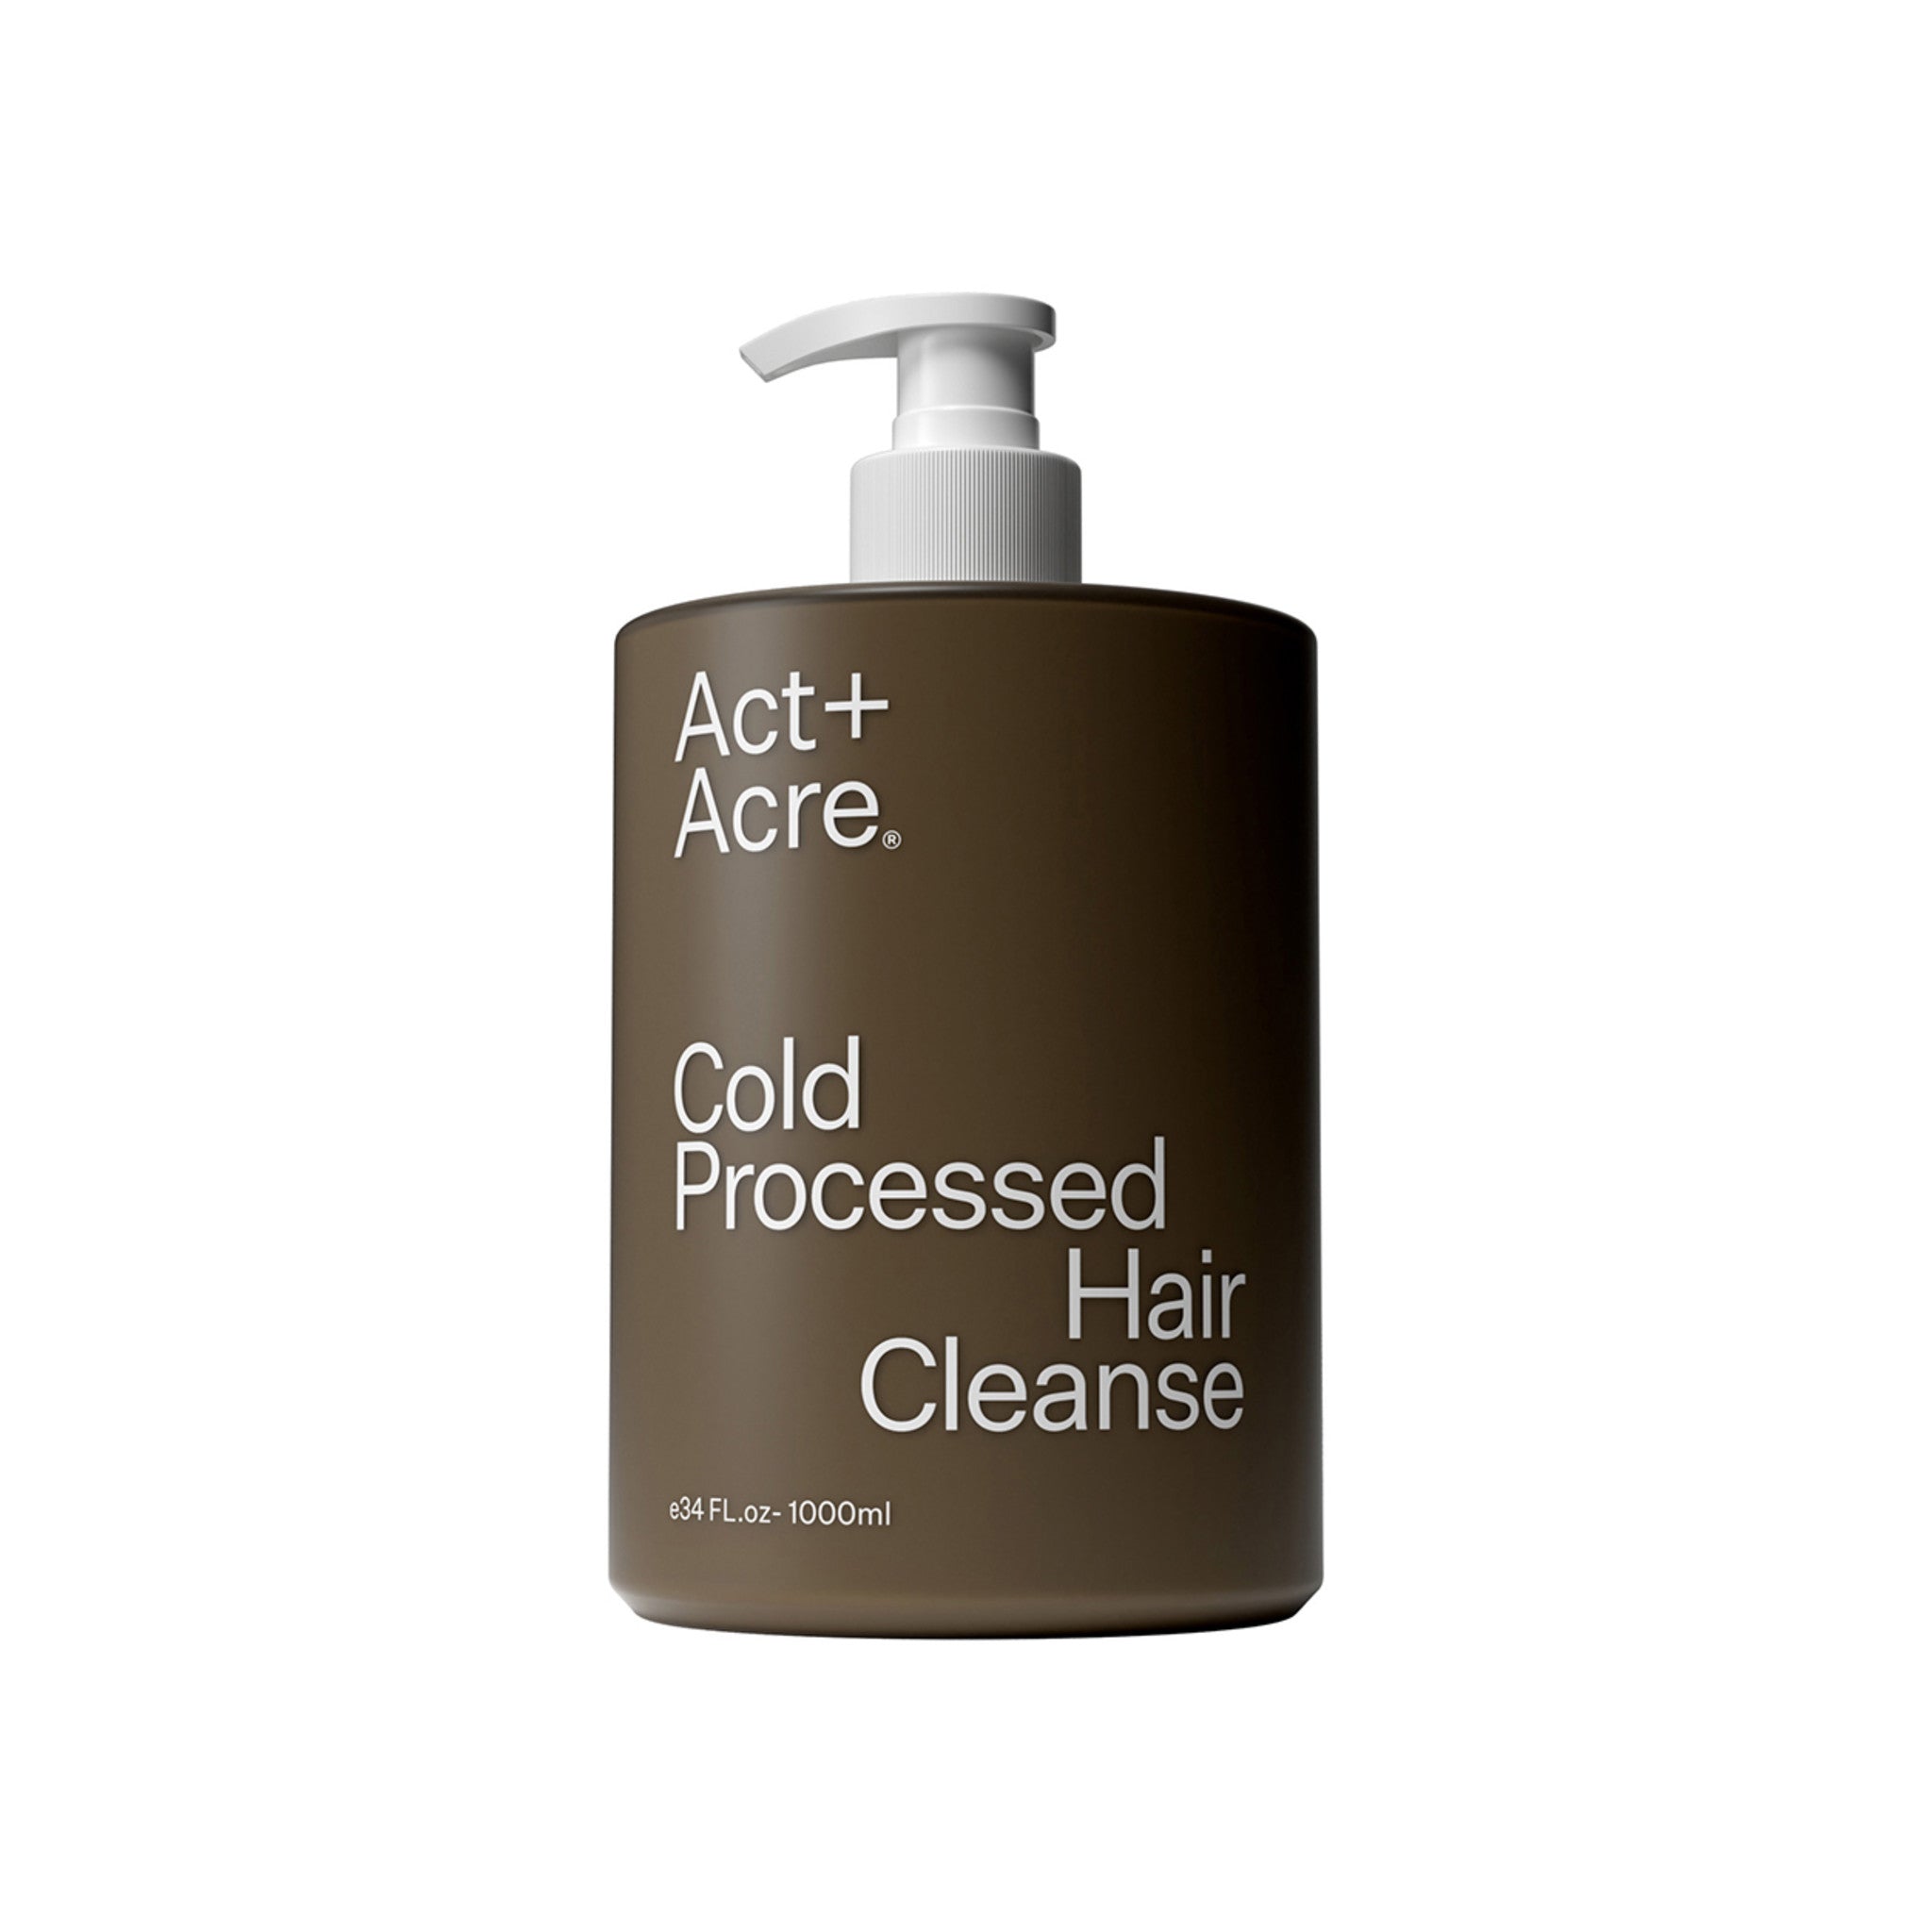 Act+Acre Hair Cleanse Jumbo main image.